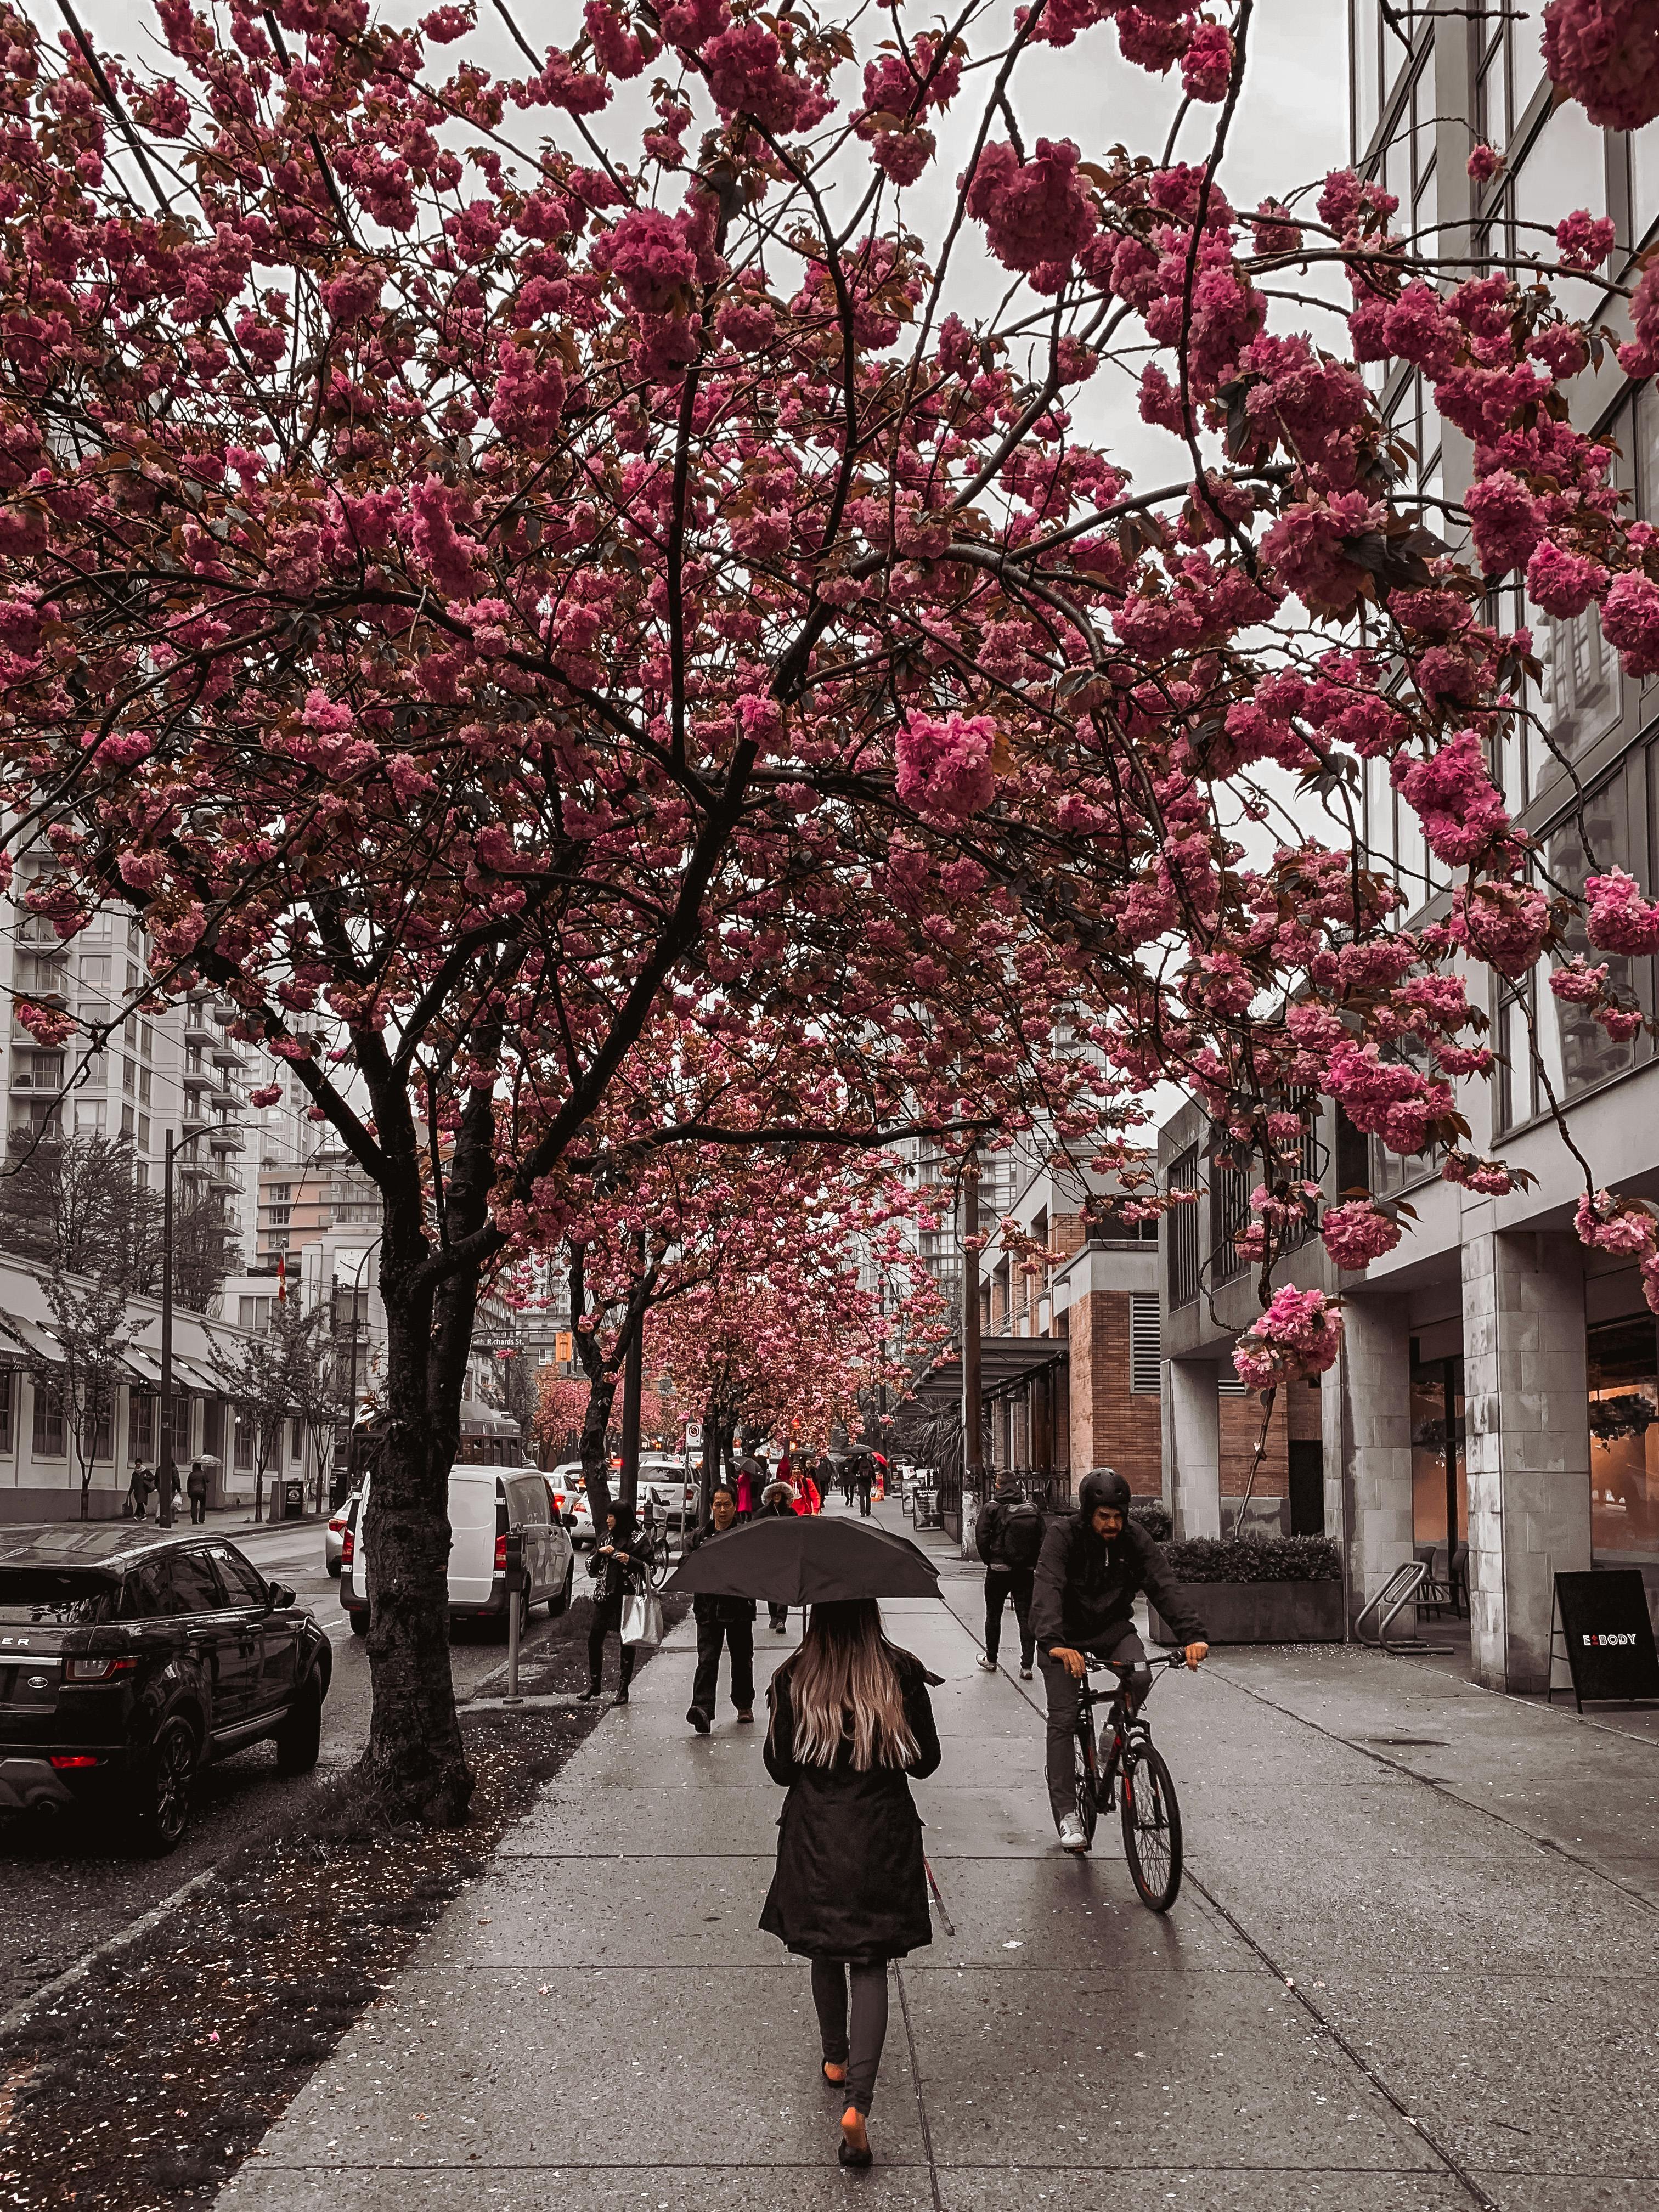 pedestrians walking along urban street with blooming trees in rain